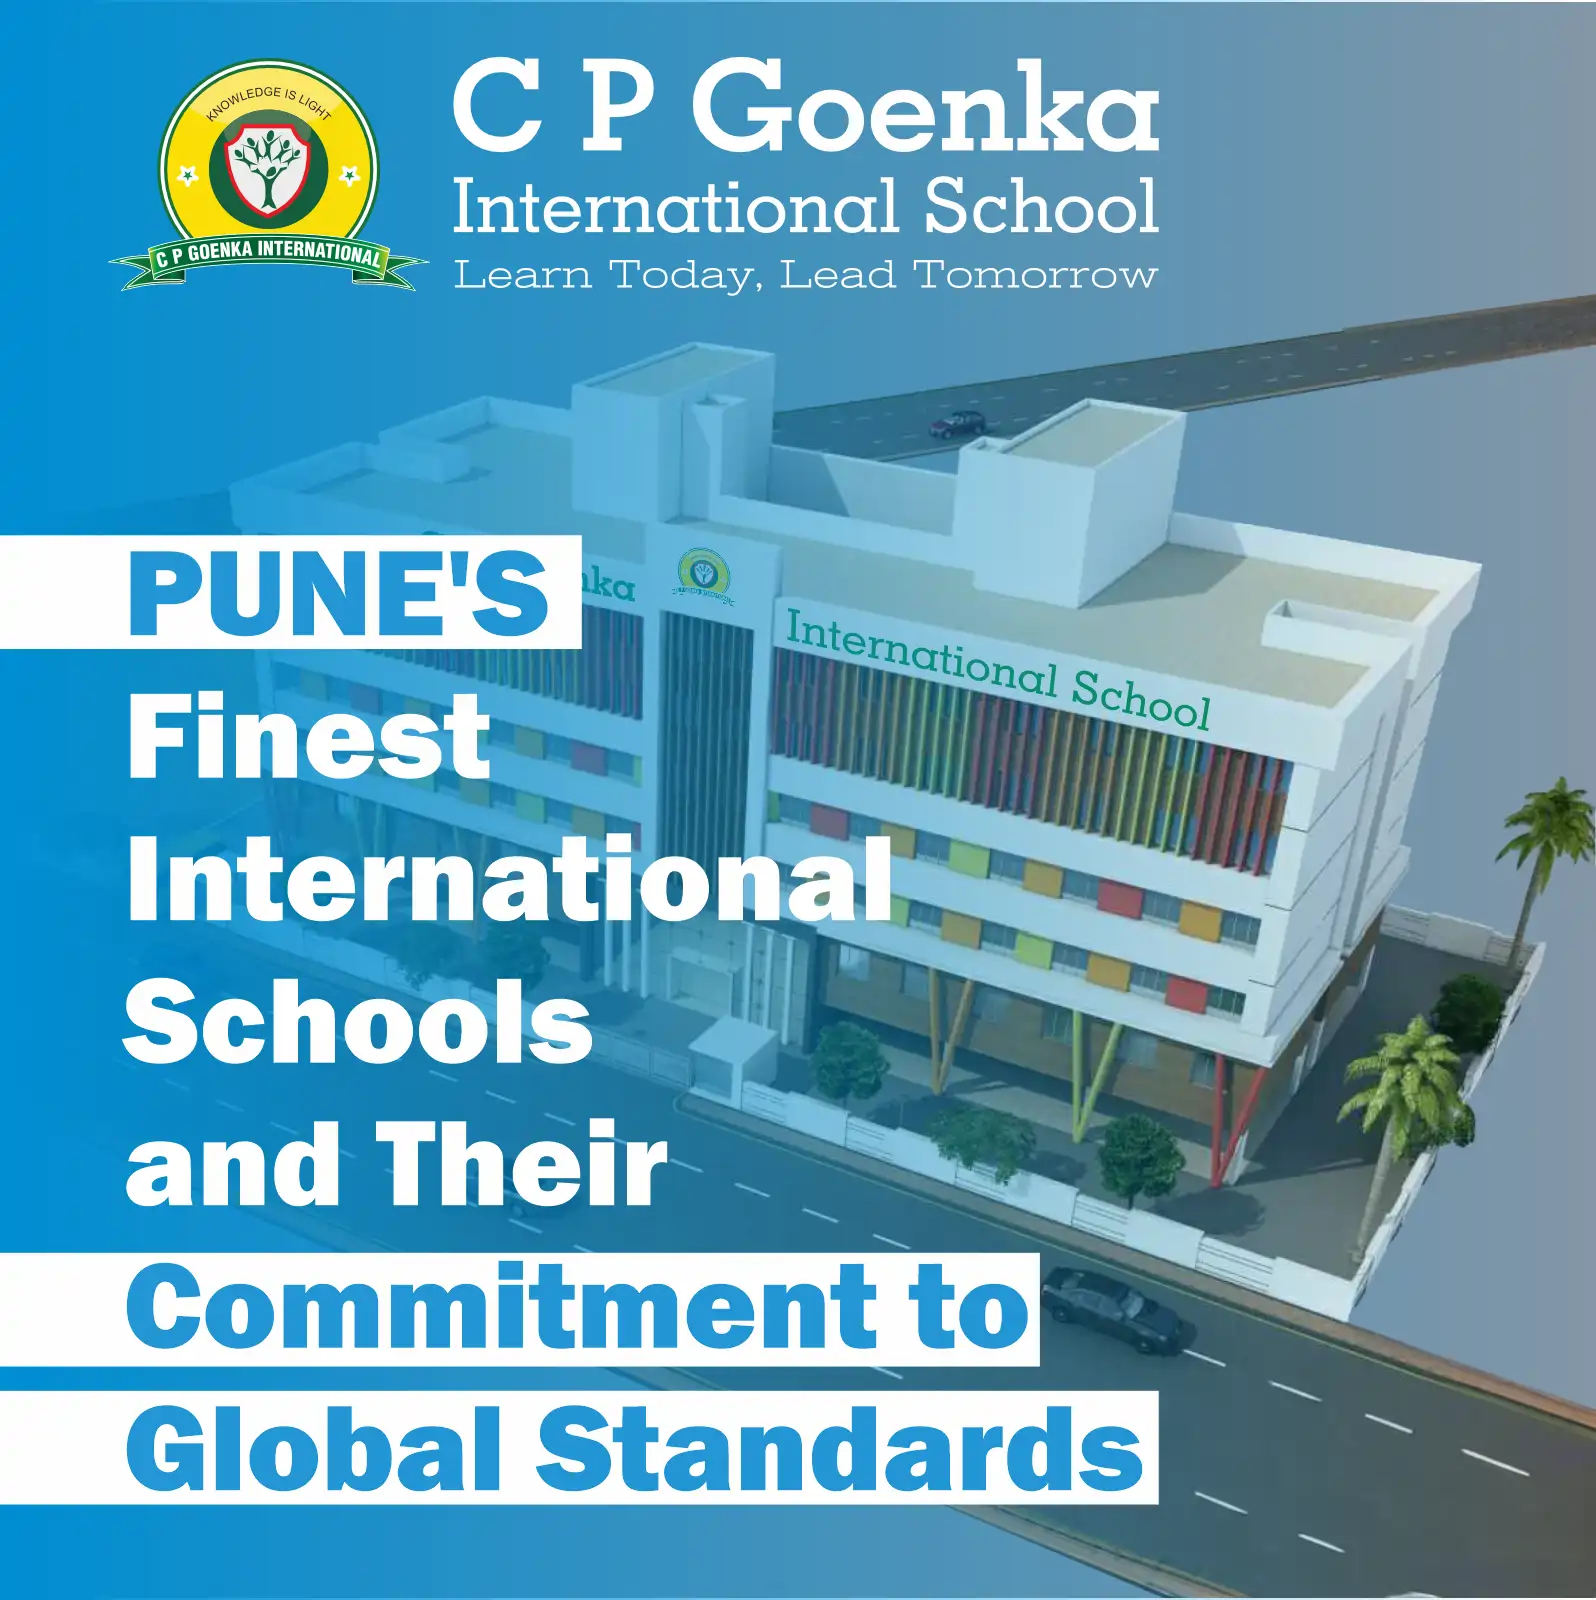 Pune's Finest International Schools